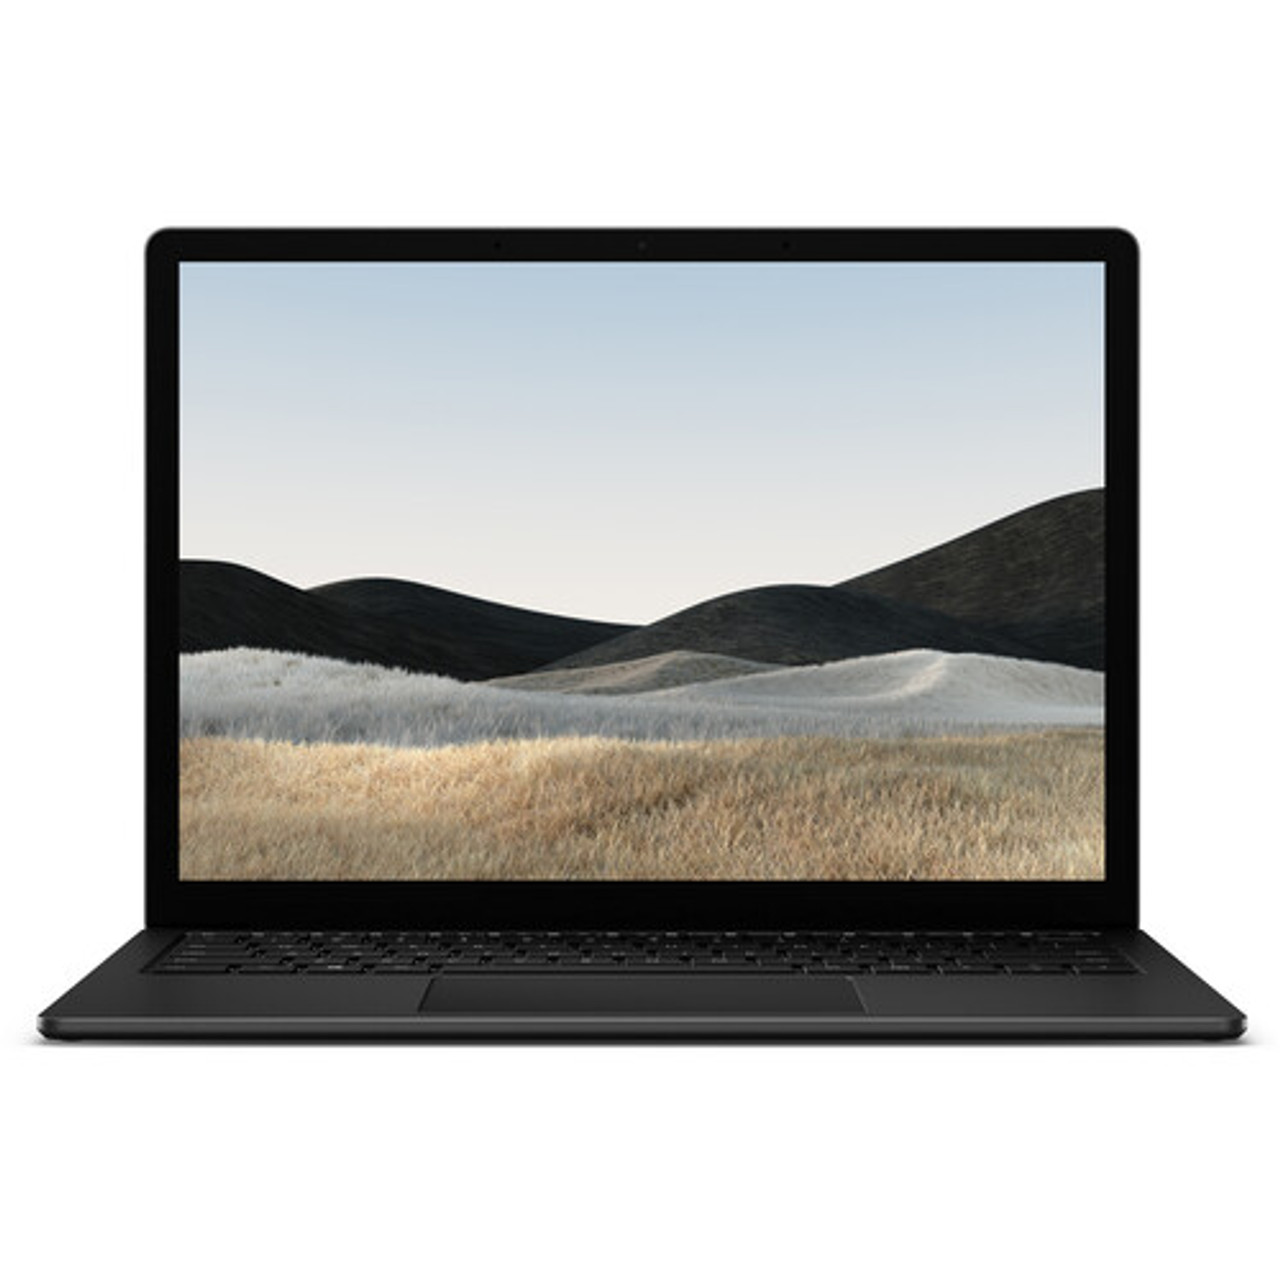 Microsoft Surface Laptop 4 - Intel Core i7, 8GB RAM, 512GB SSD, 15"  Touchscreen, Windows 10 Pro,